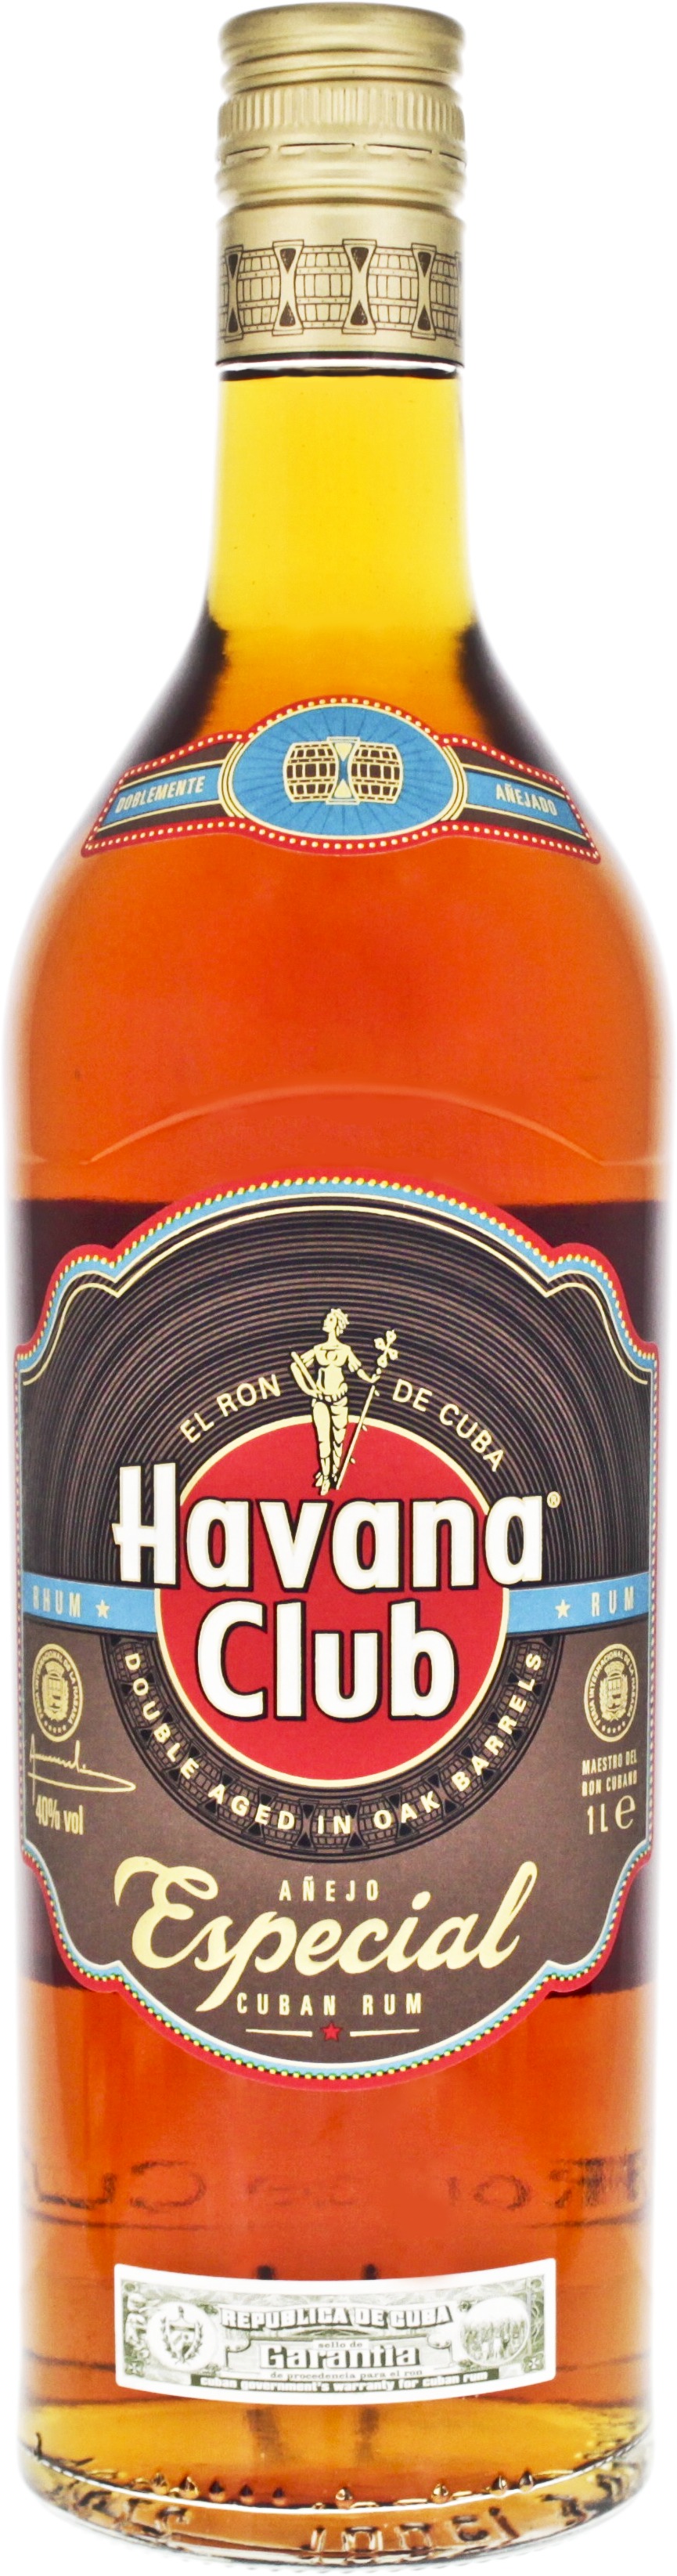 Havana Club Anejo Especial Cuban Rum 40% 1L in duty-free at bordershop Chop  Tysa